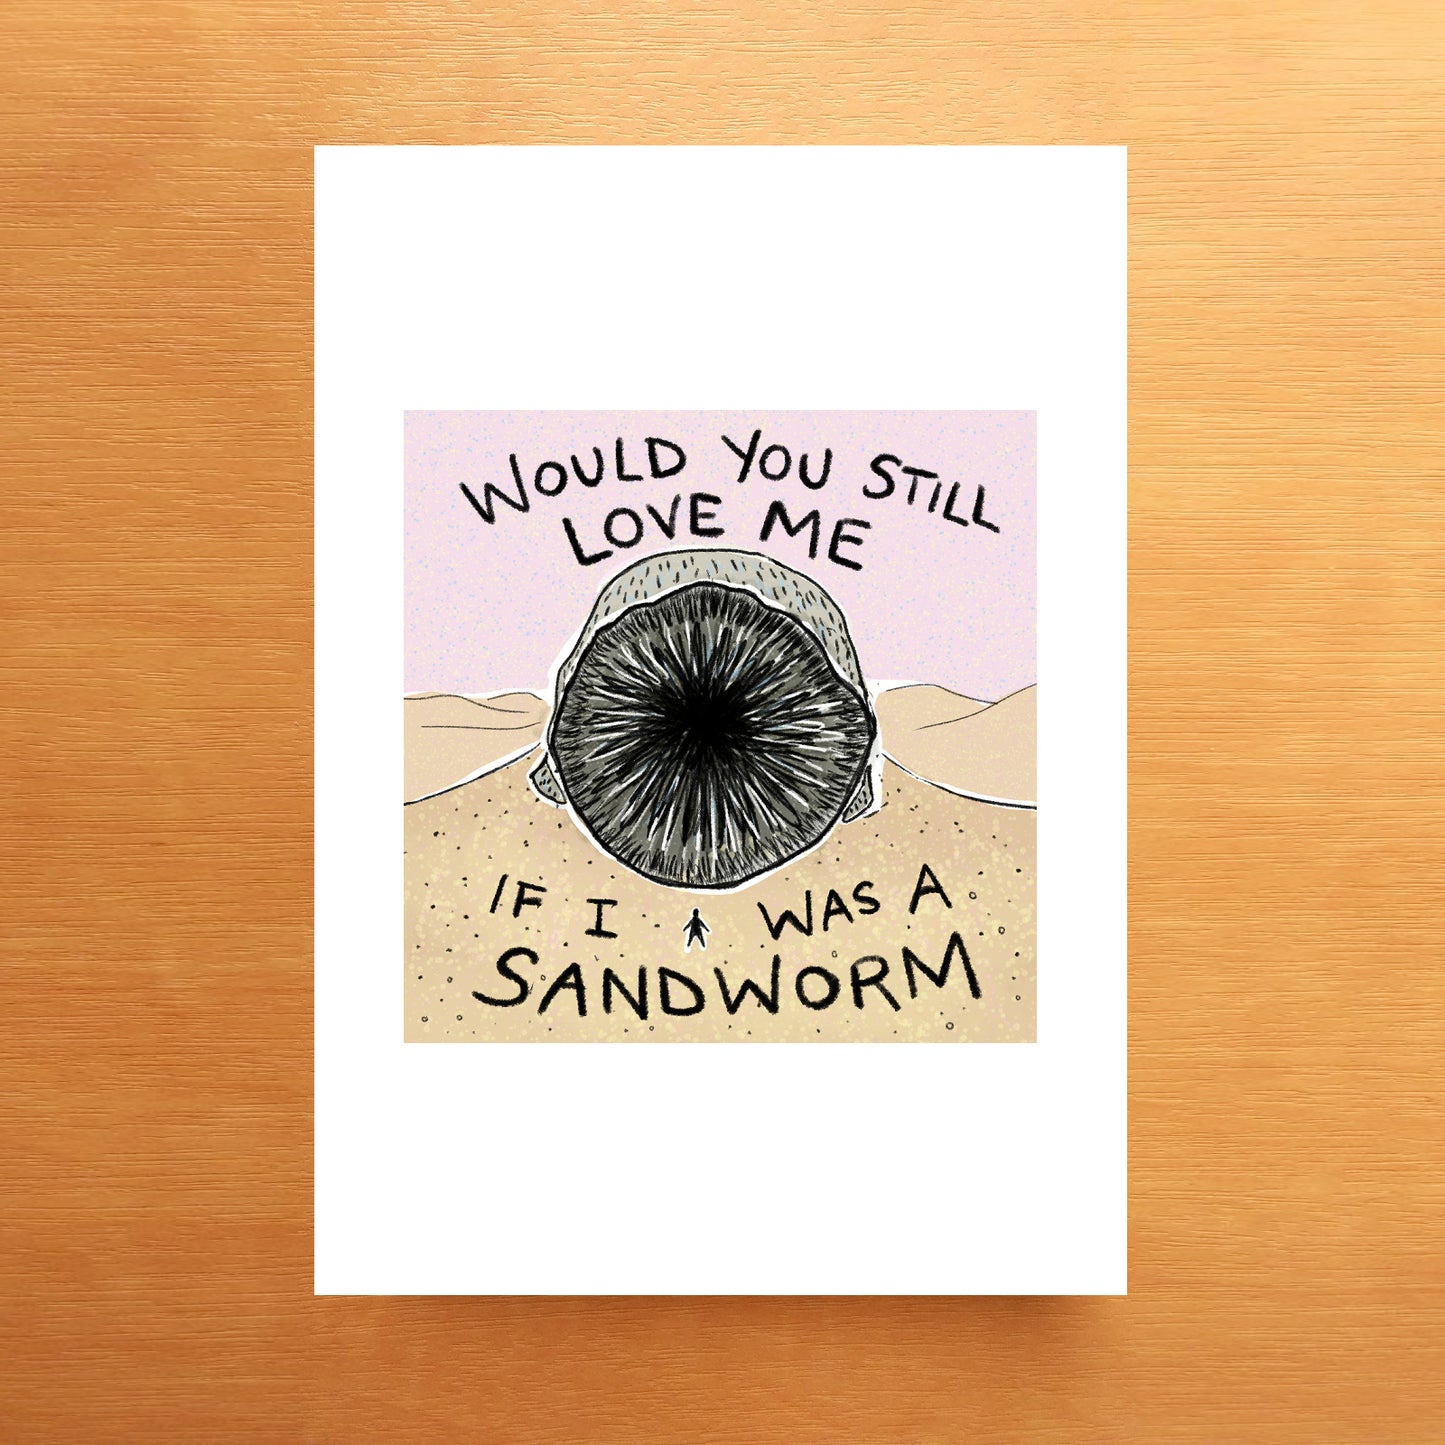 Sandworm - High quality A4 print